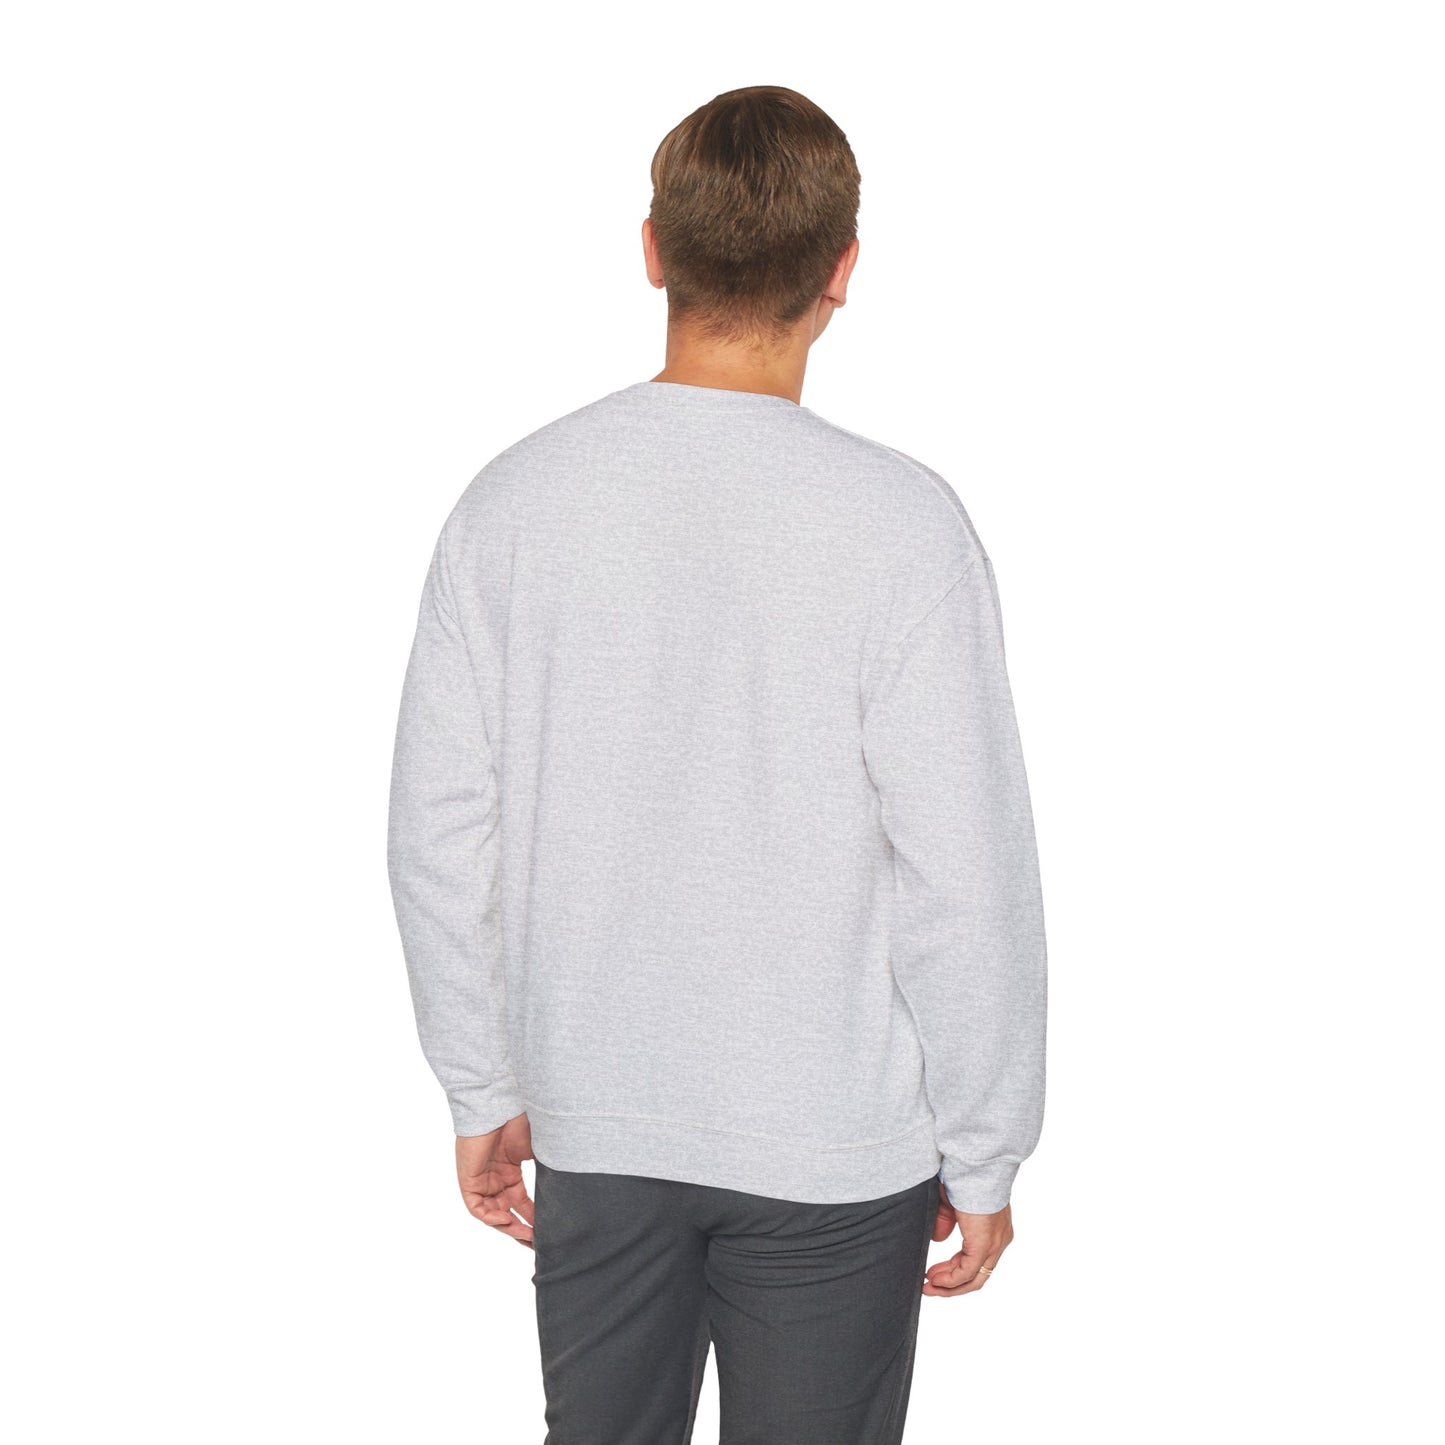 Fishing dad - Unisex Heavy Blend™ Crewneck Sweatshirt